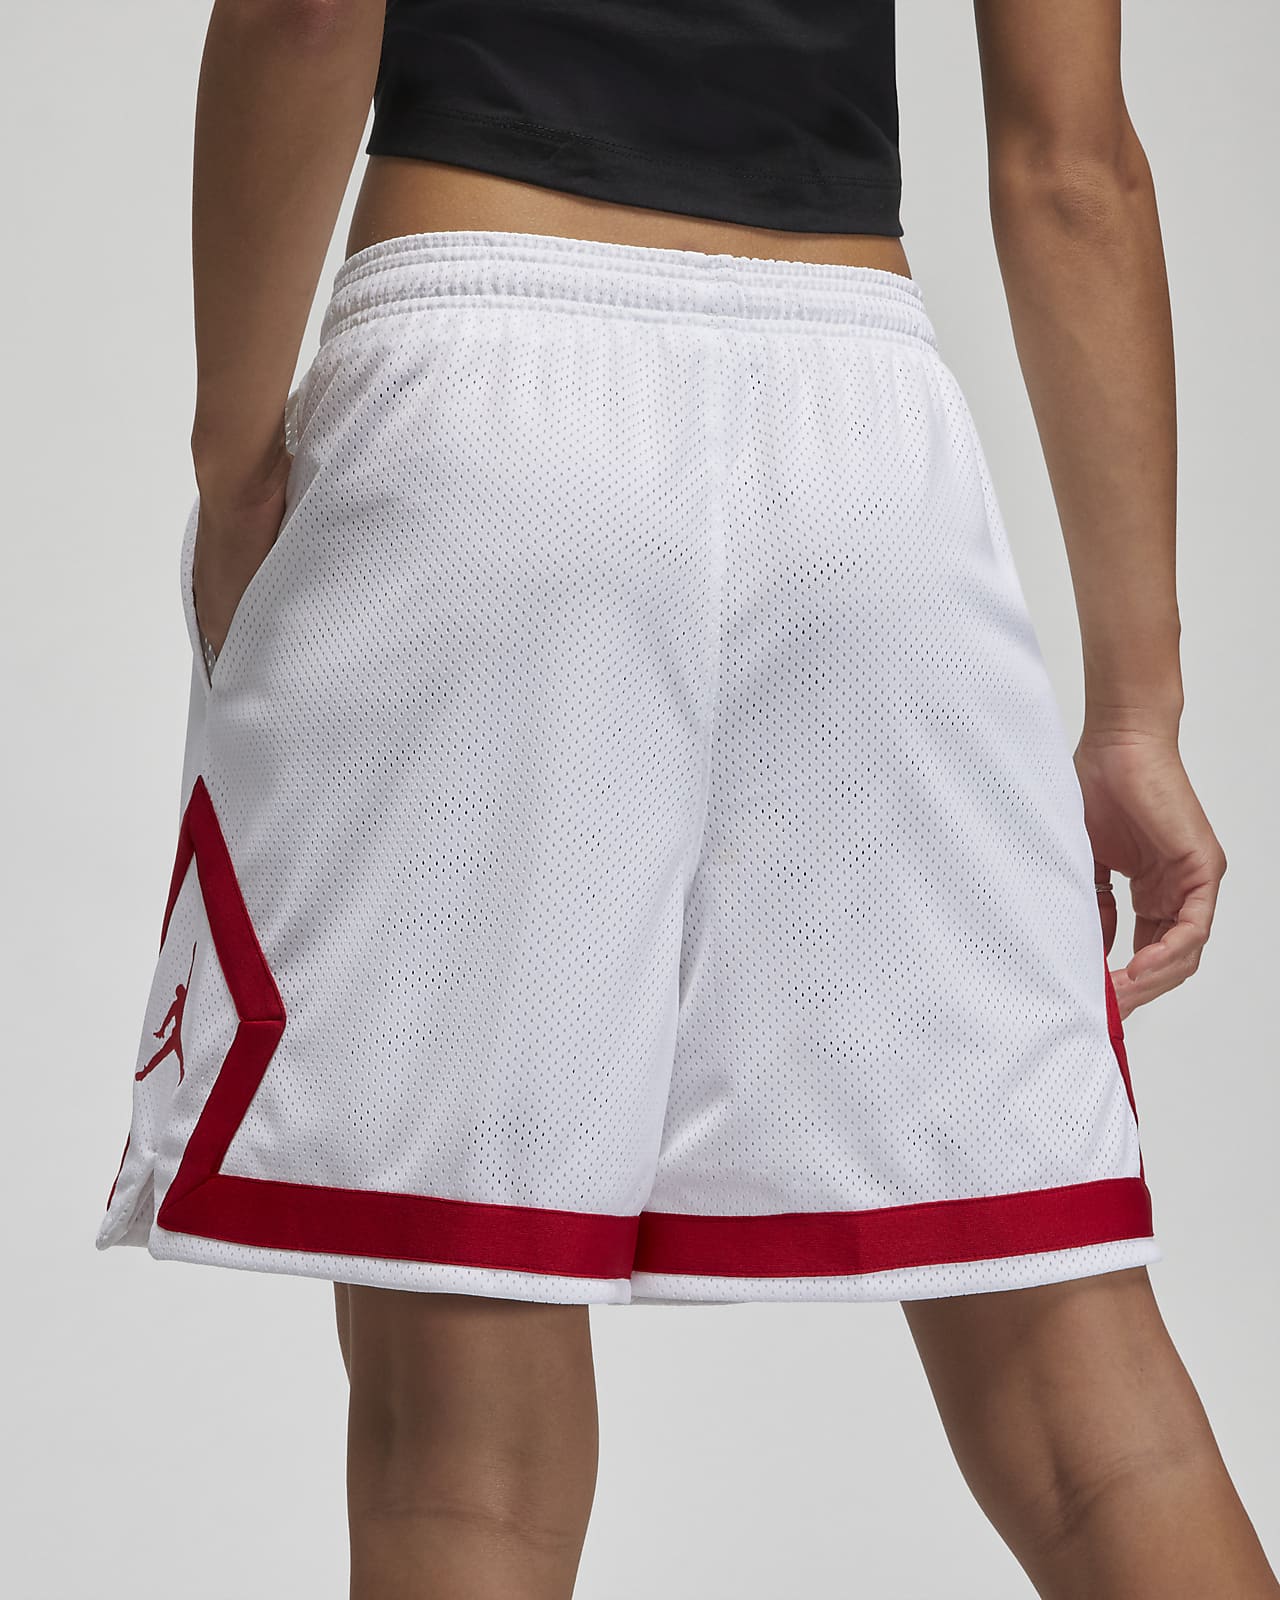 NIKE AIR JORDAN X PSG BASKETBALL SHORTS  Air jordans, Basketball shorts,  White nike shorts